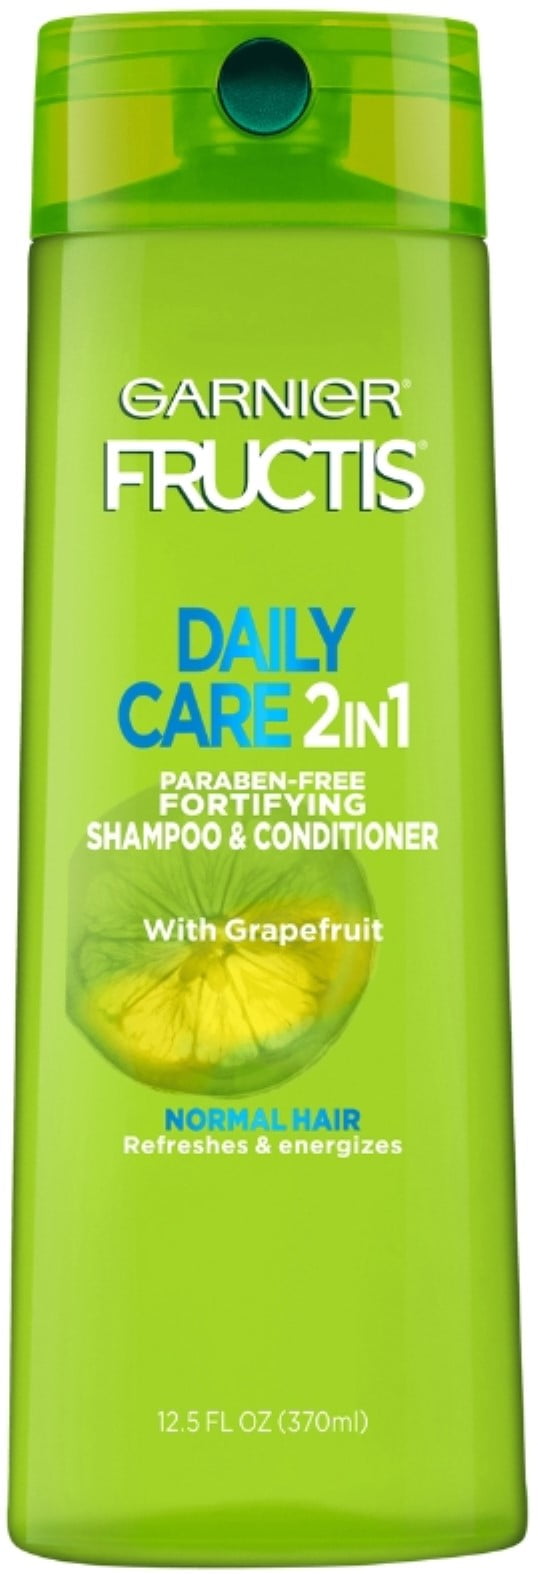 Men have på Opdatering Garnier Fructis Daily Care 2 In 1 Shampoo & Conditioner 12.5 oz (Pack of 3)  - Walmart.com